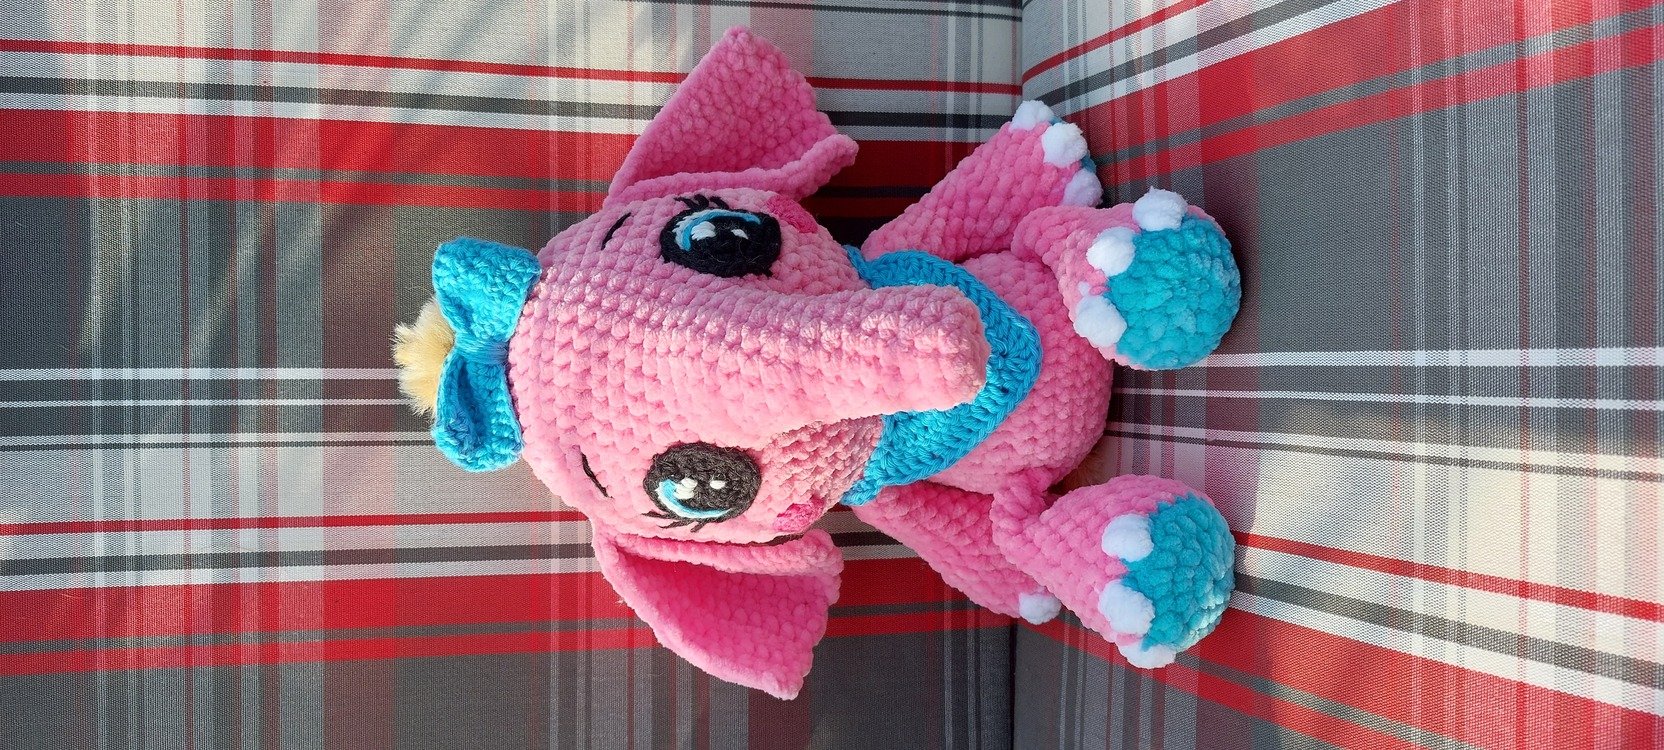 Sima the baby Elephant easy Crochet Pattern